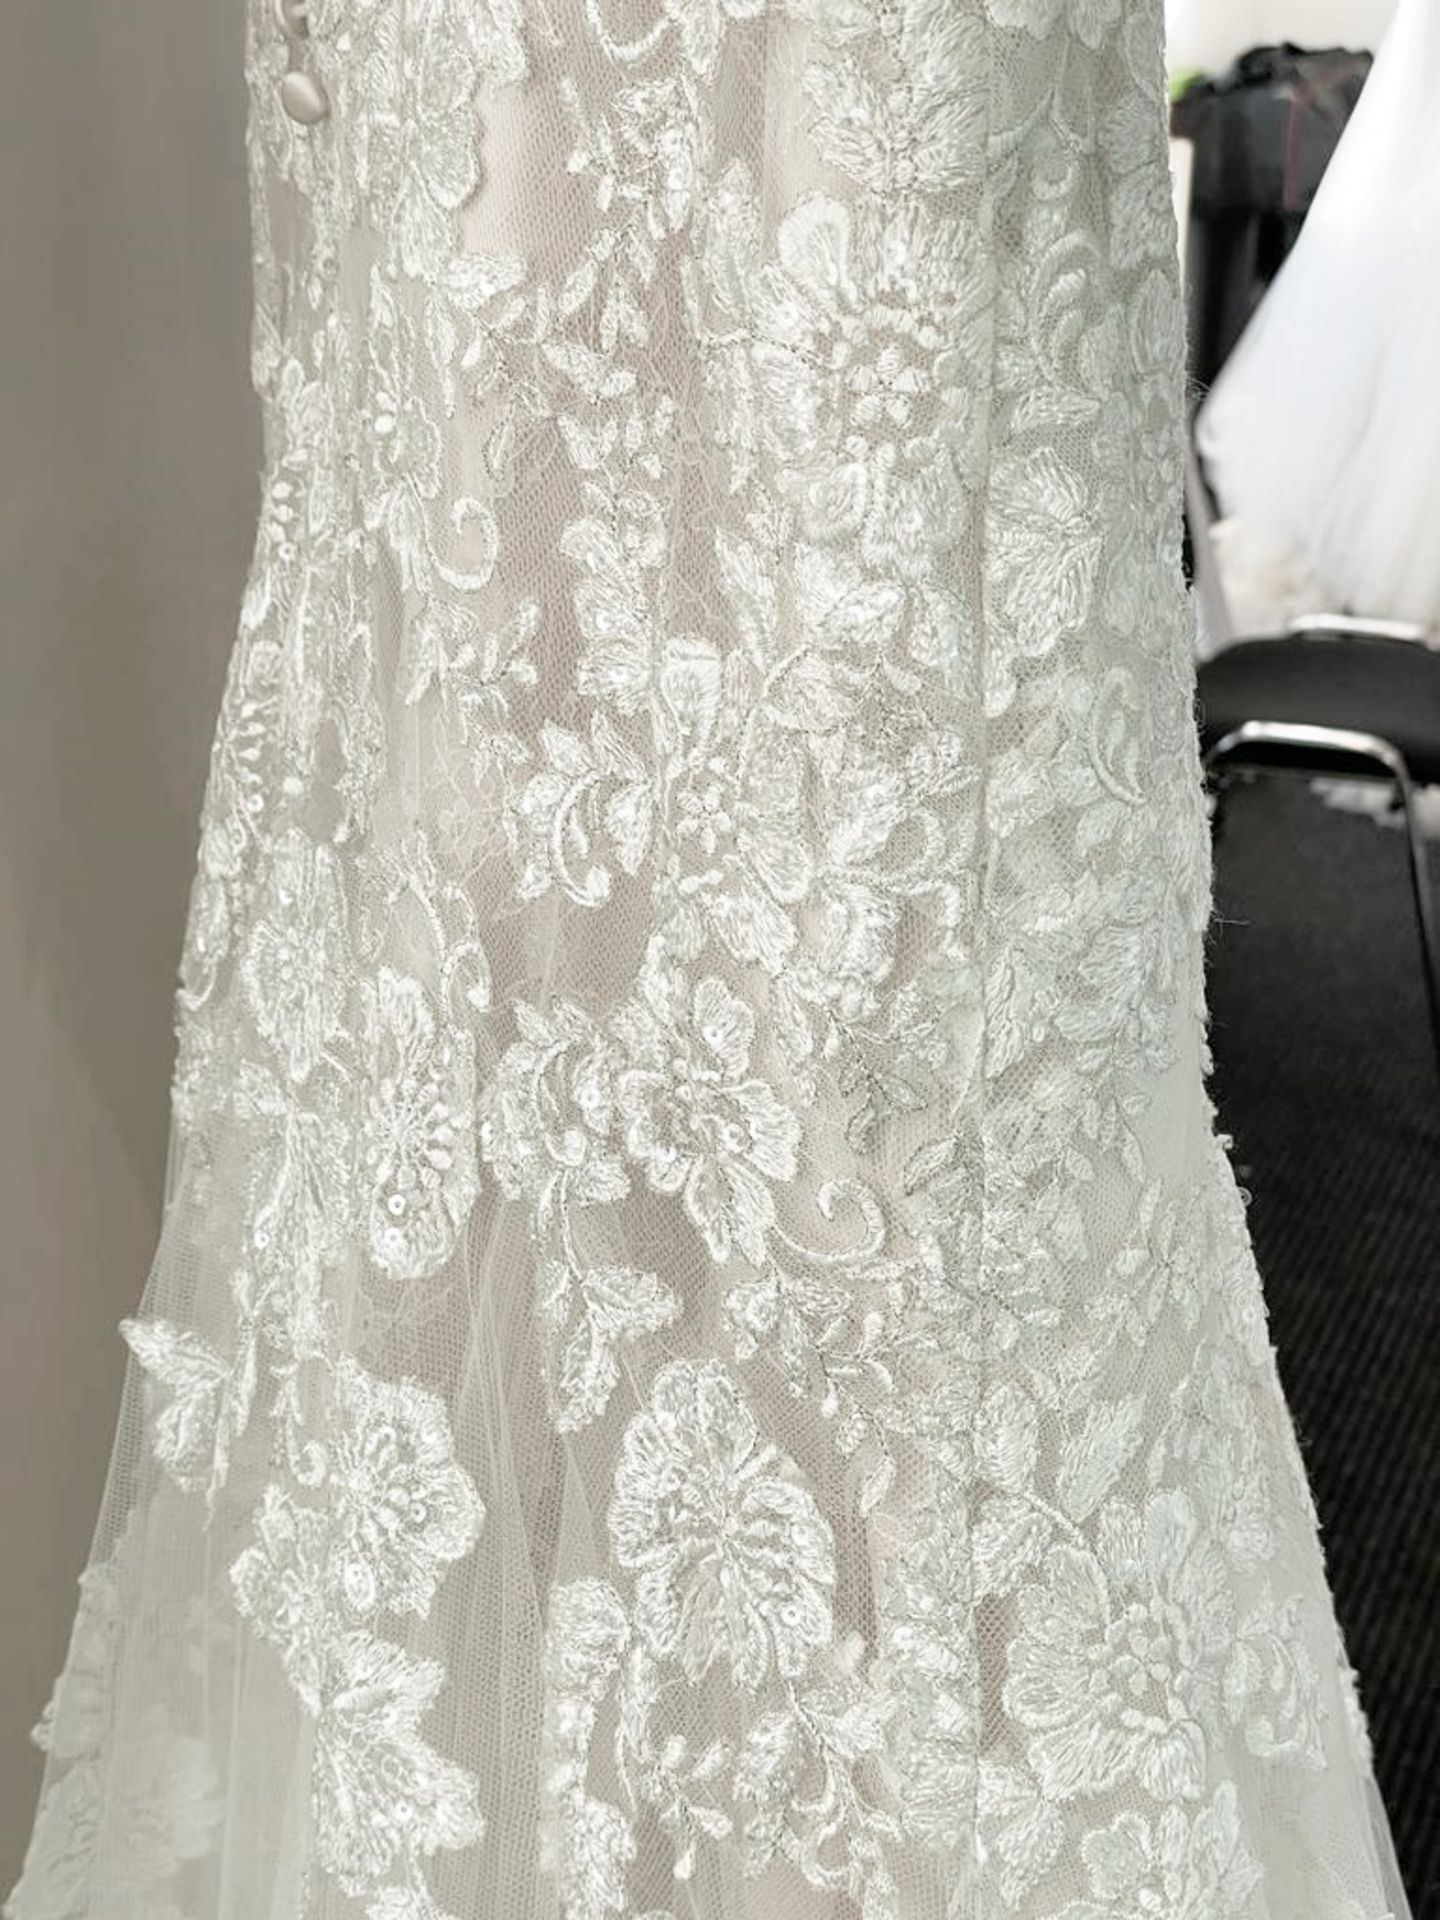 1 x DIANA LEGRANDE '7517' Designer Wedding Dress Bridal Gown - Size: UK 10 - Original RRP £1,800 - Image 12 of 18